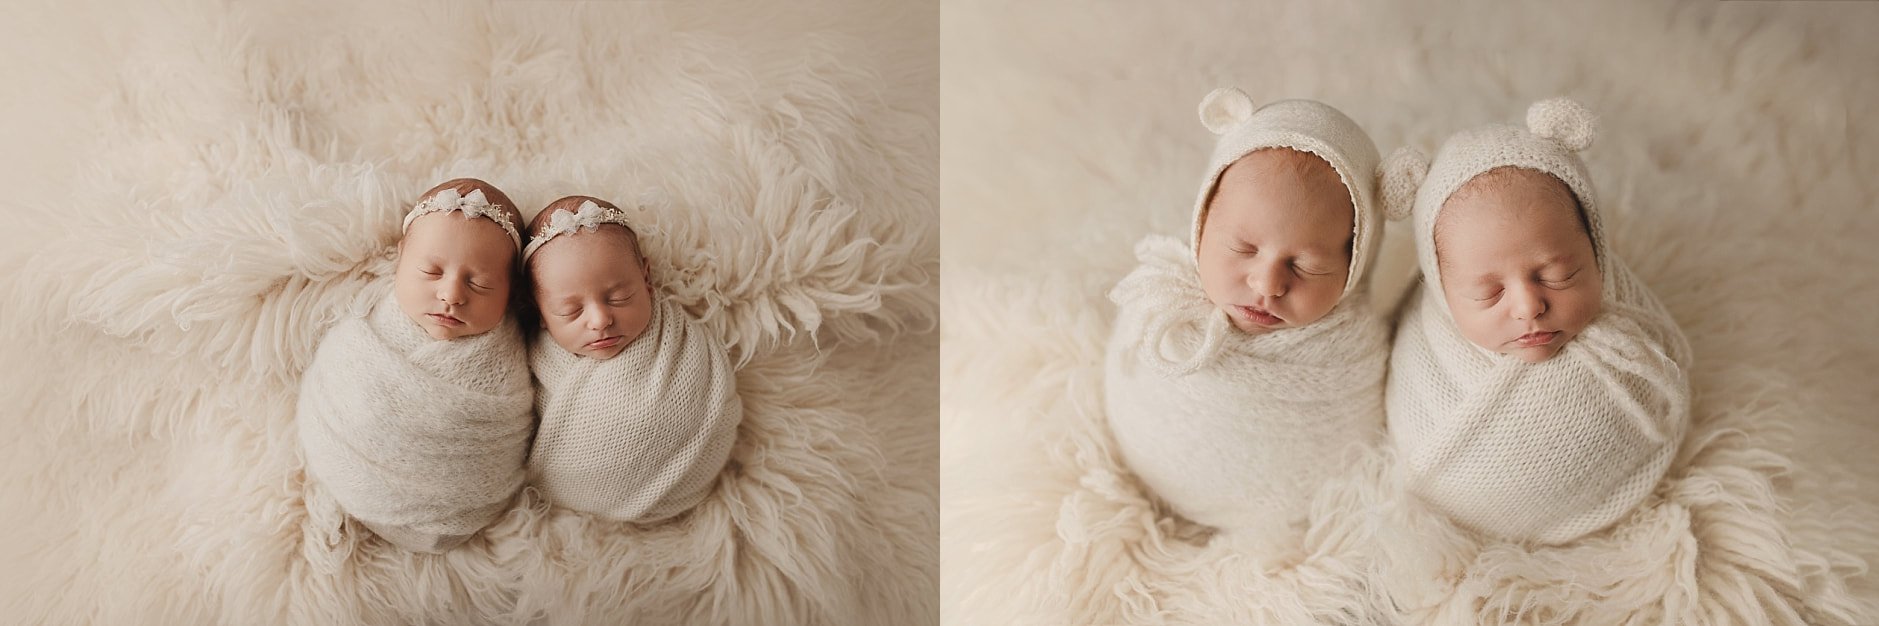 newborn twin photography portland oregon 1.jpeg